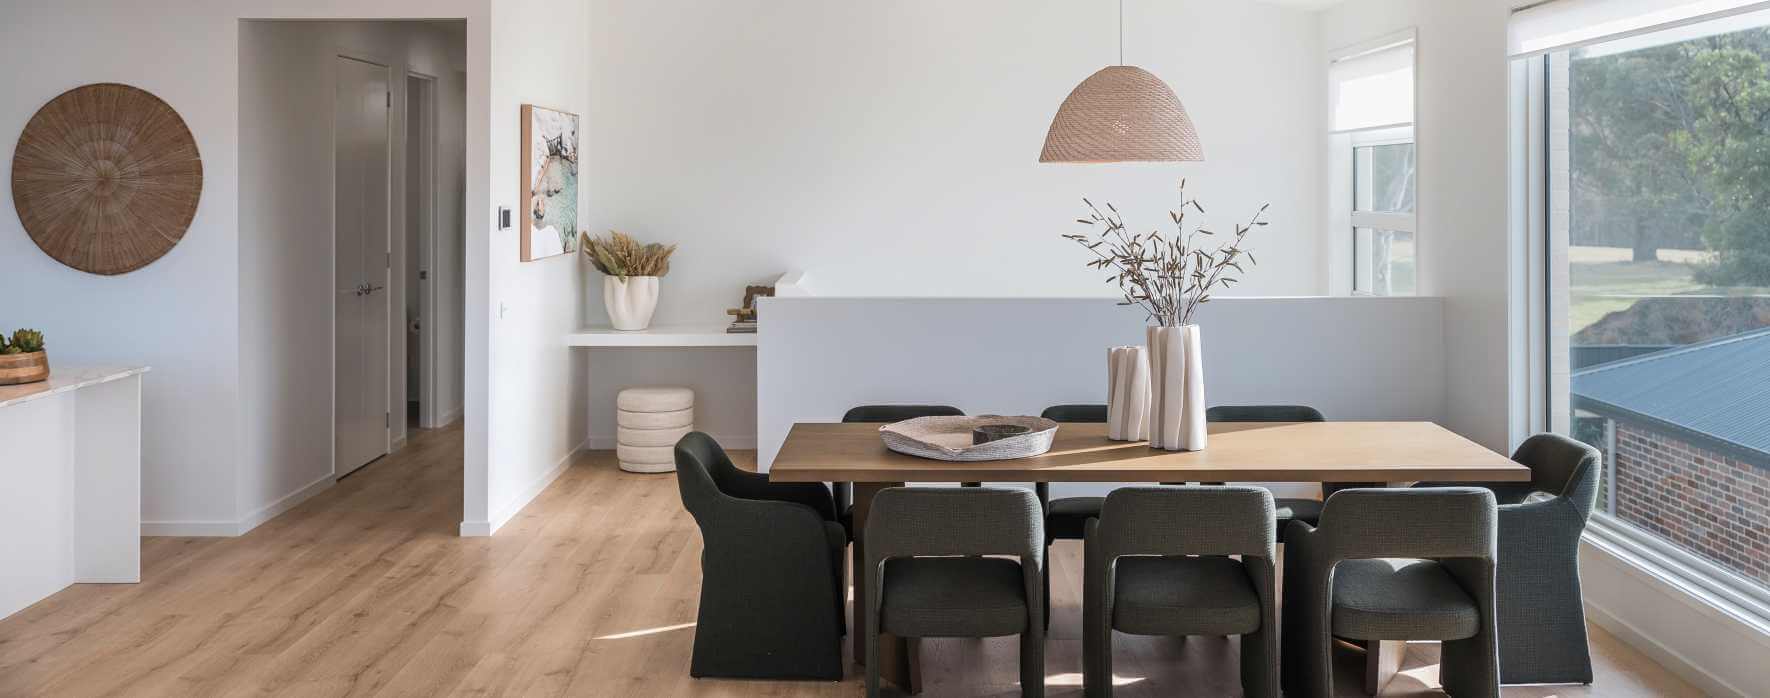 bellavista-30-double-storey-house-design-dining